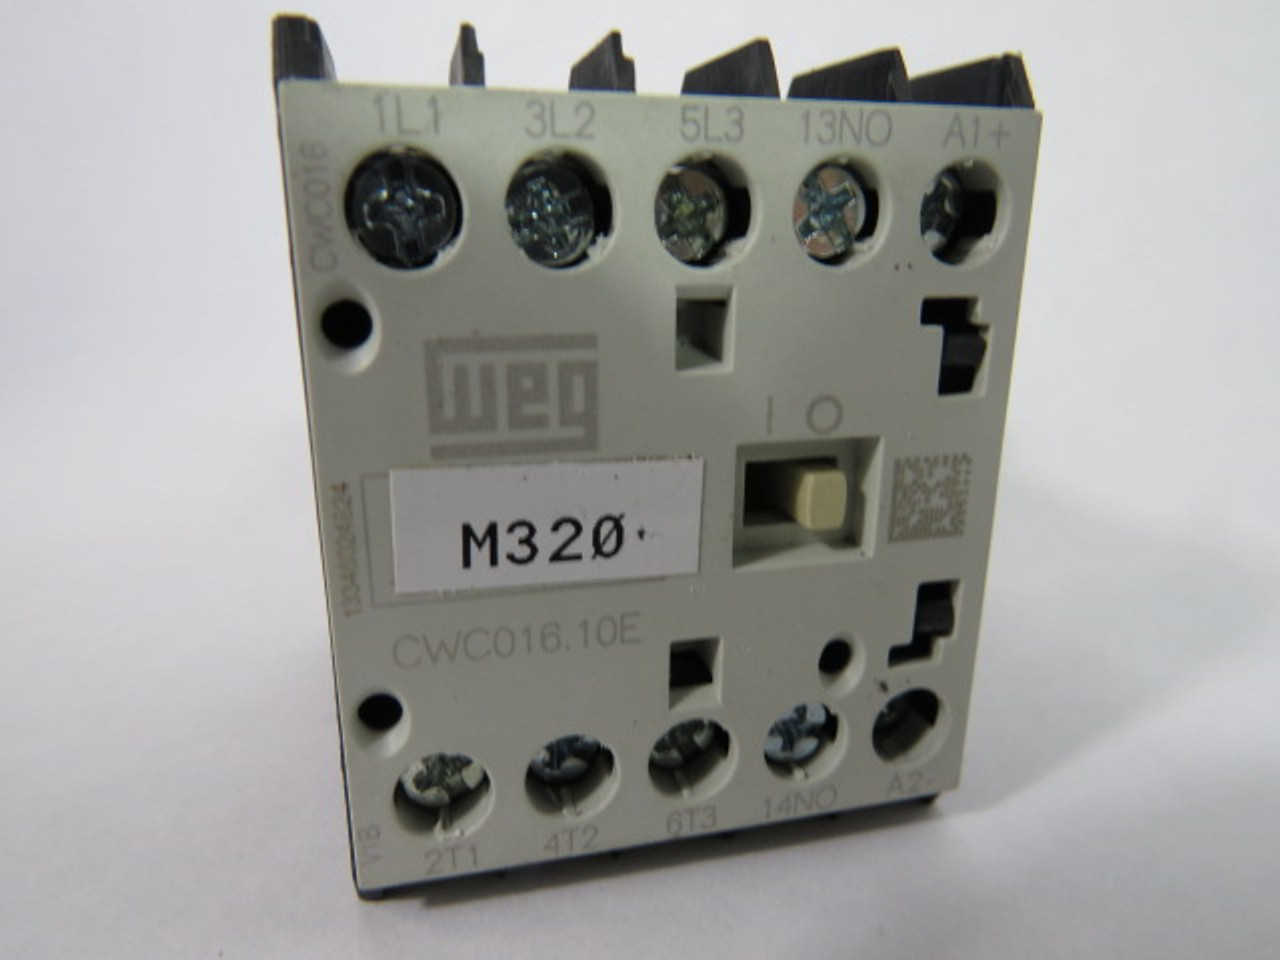 Weg CWC016.10-30L03 Miniature Contactor 24VDC 16A 3N/O USED